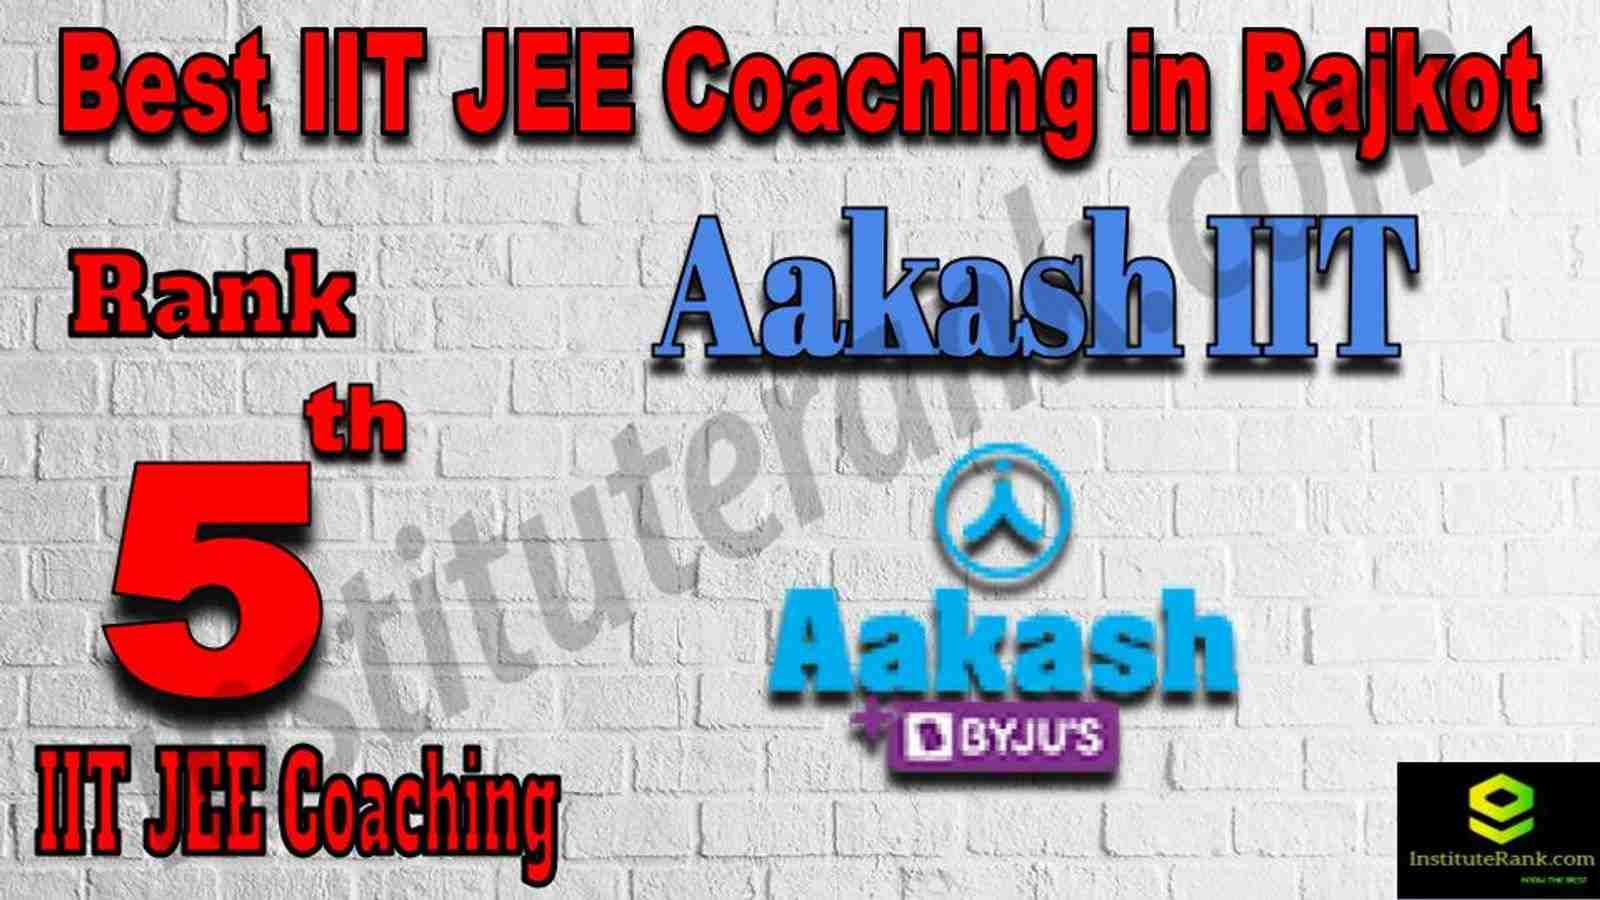 5th Best IIT JEE Coaching in Rajkot